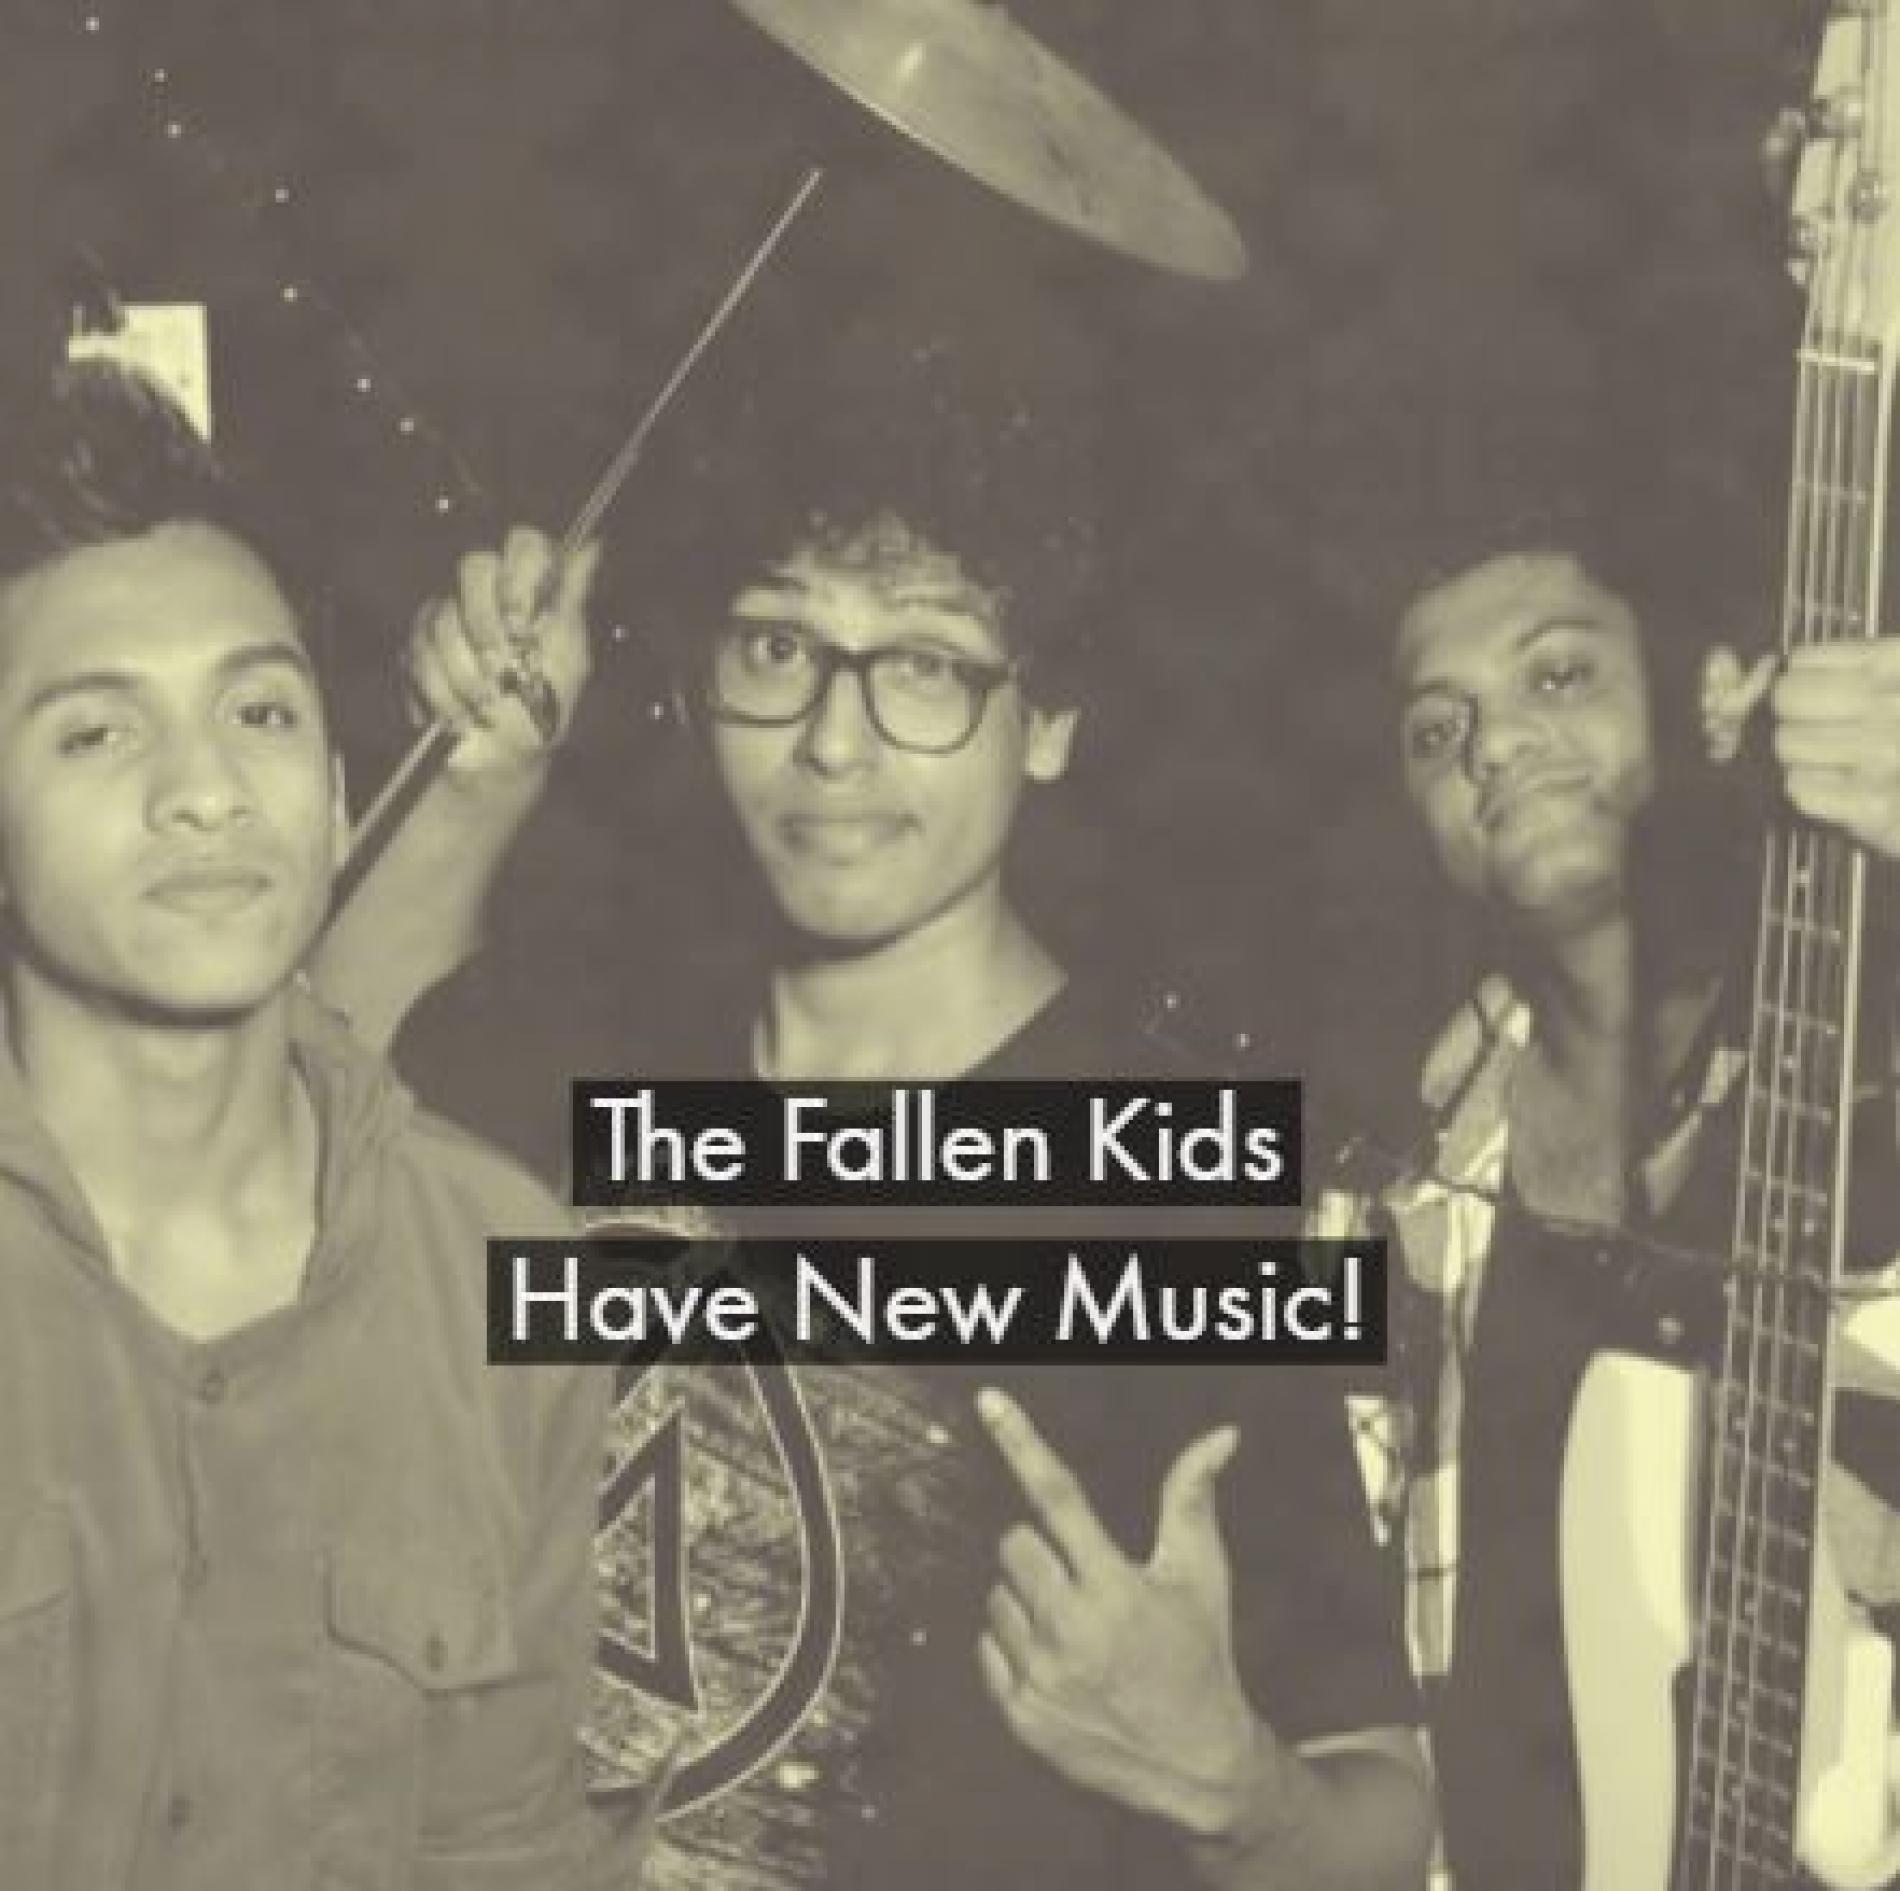 The Fallen Kids Release A New Video